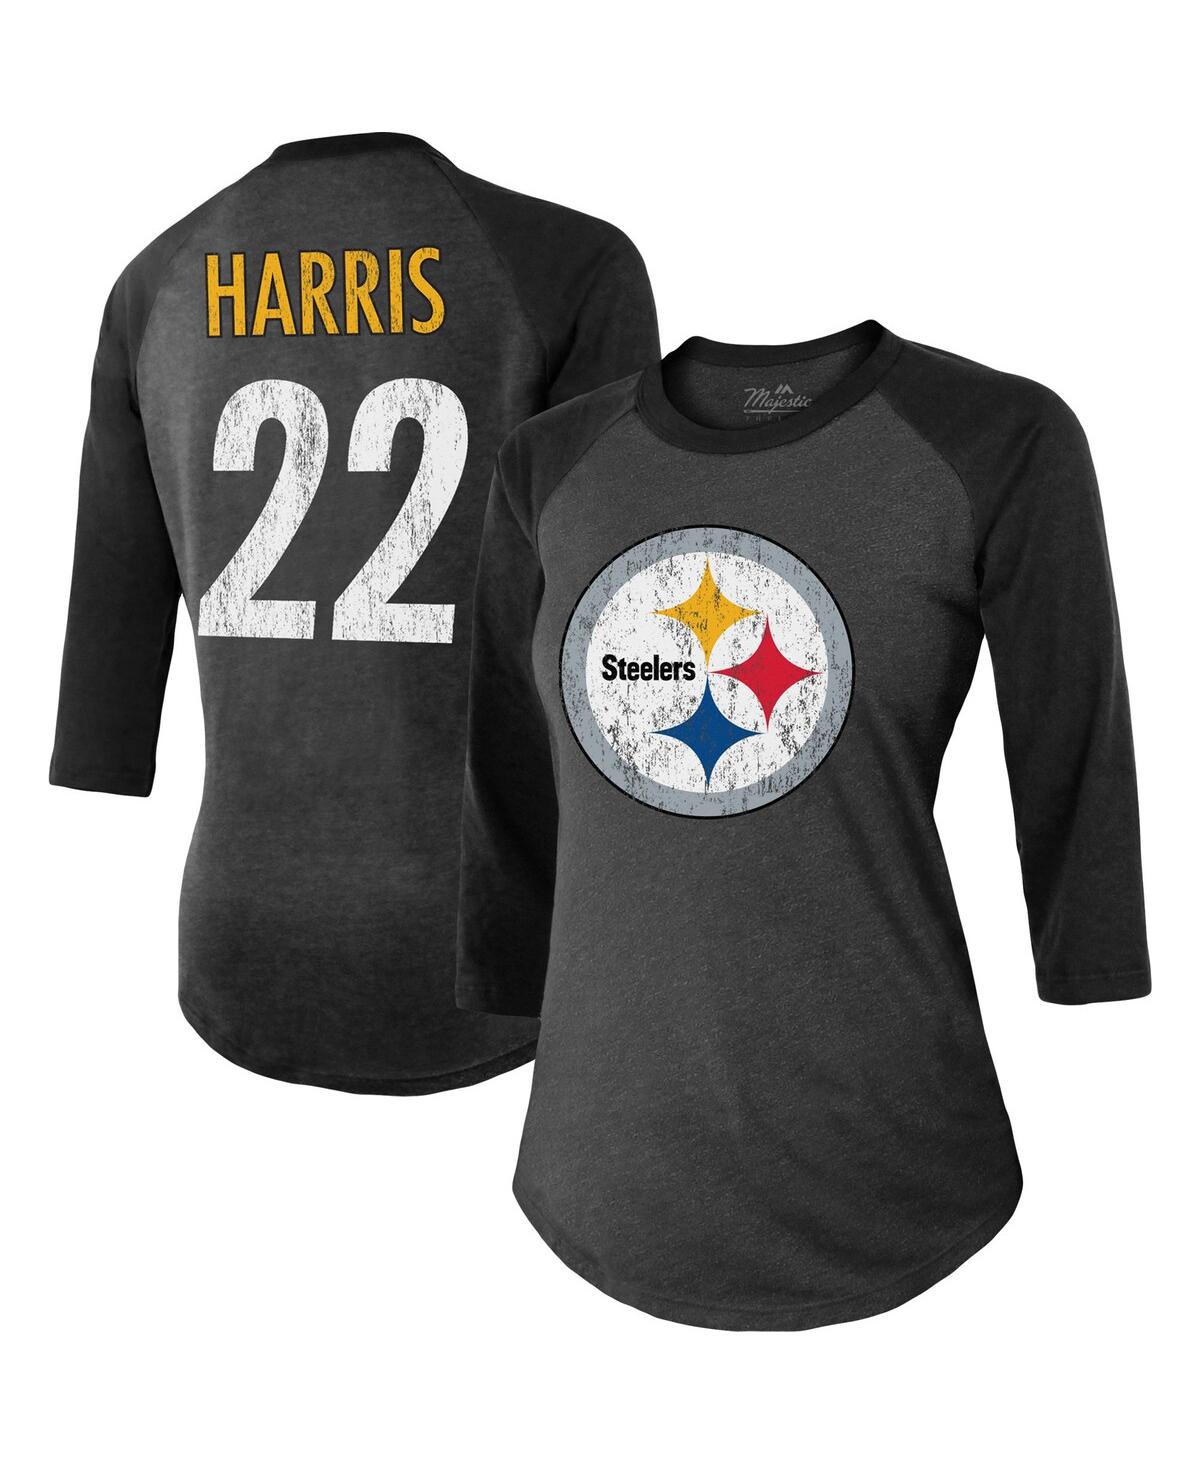 Women's Majestic Threads Najee Harris Black Pittsburgh Steelers Player Name and Number Raglan Tri-Blend 3/4-Sleeve T-shirt - Black